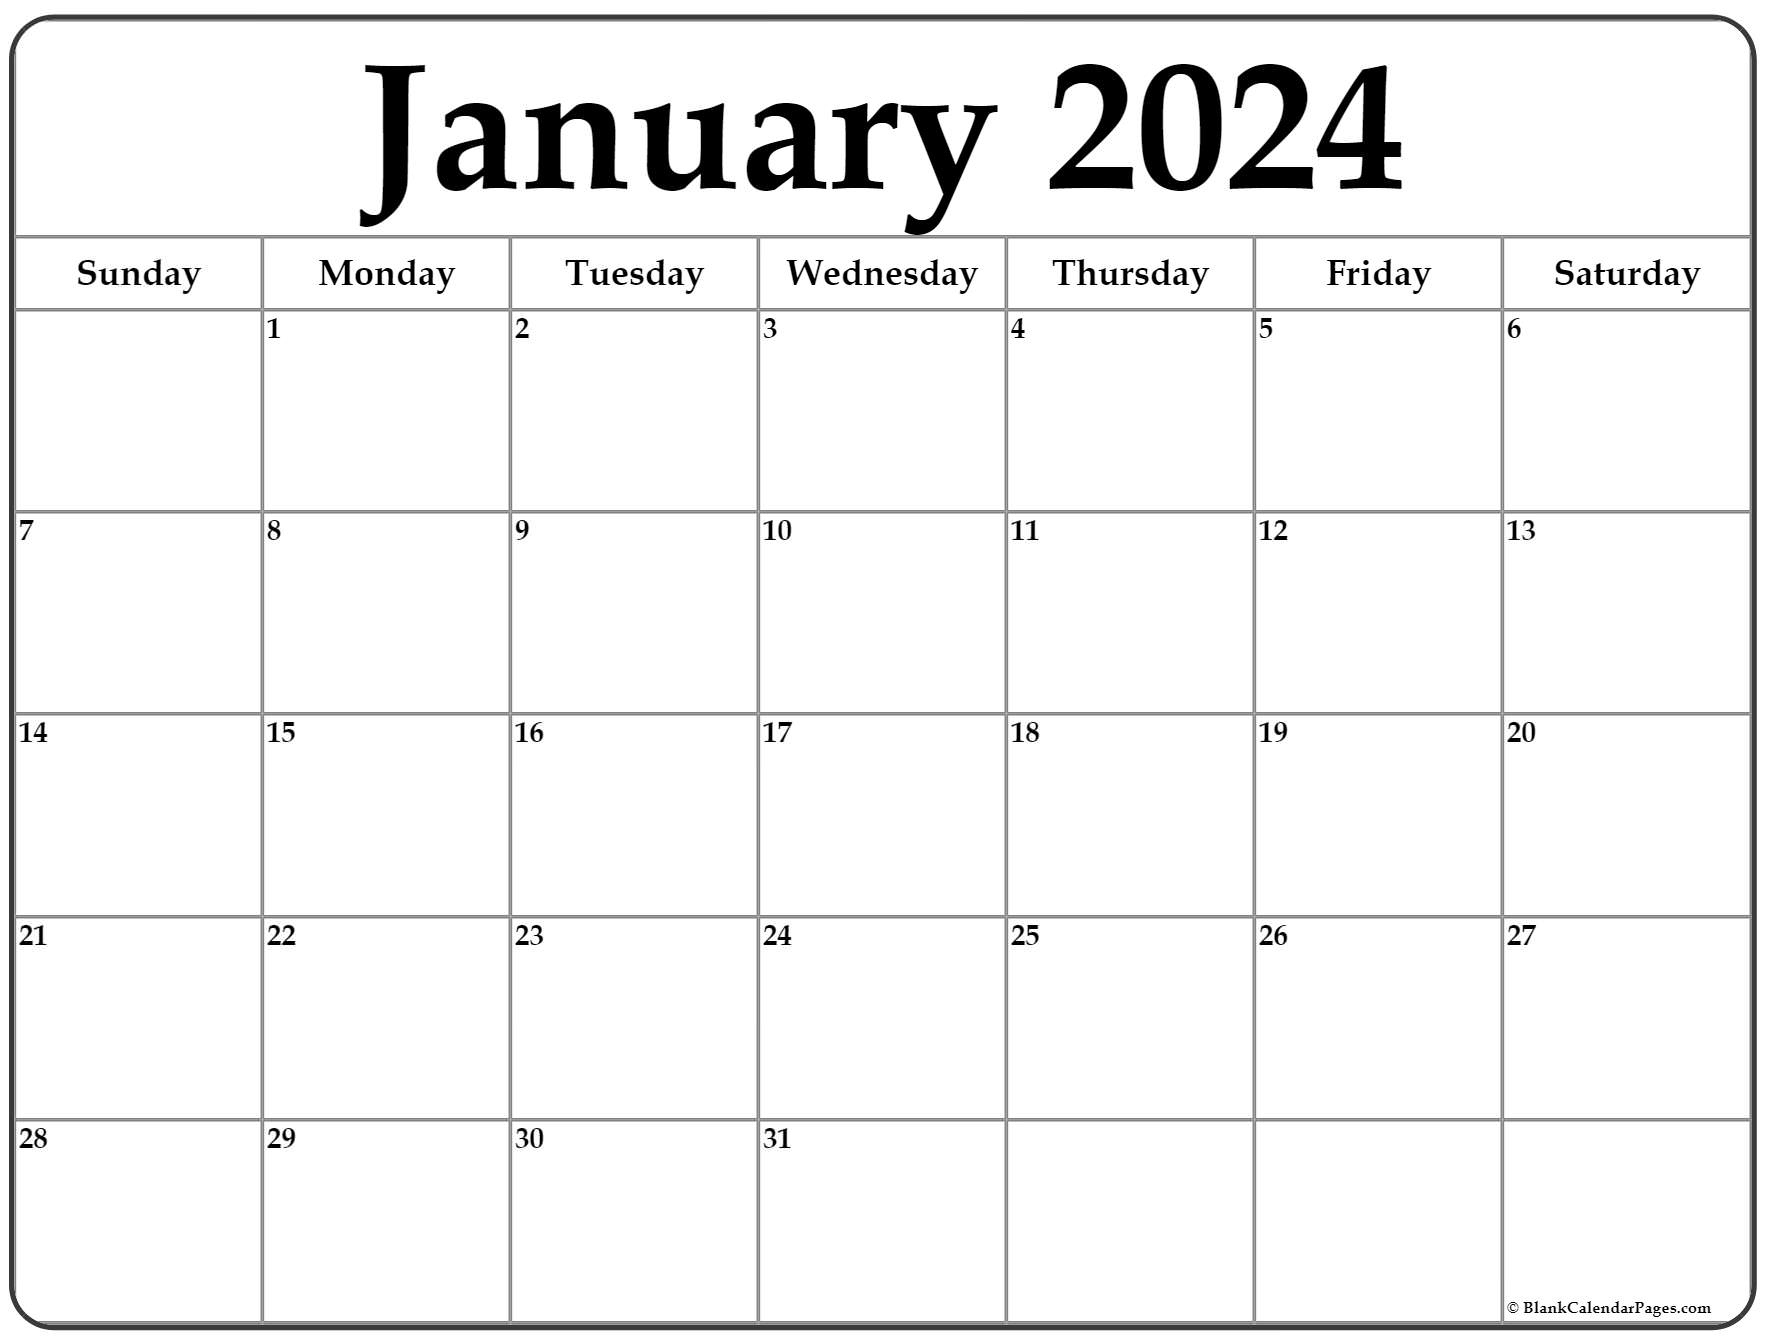 January 2024 Calendar | Free Printable Calendar | Printable 2024 Monthly Calendars